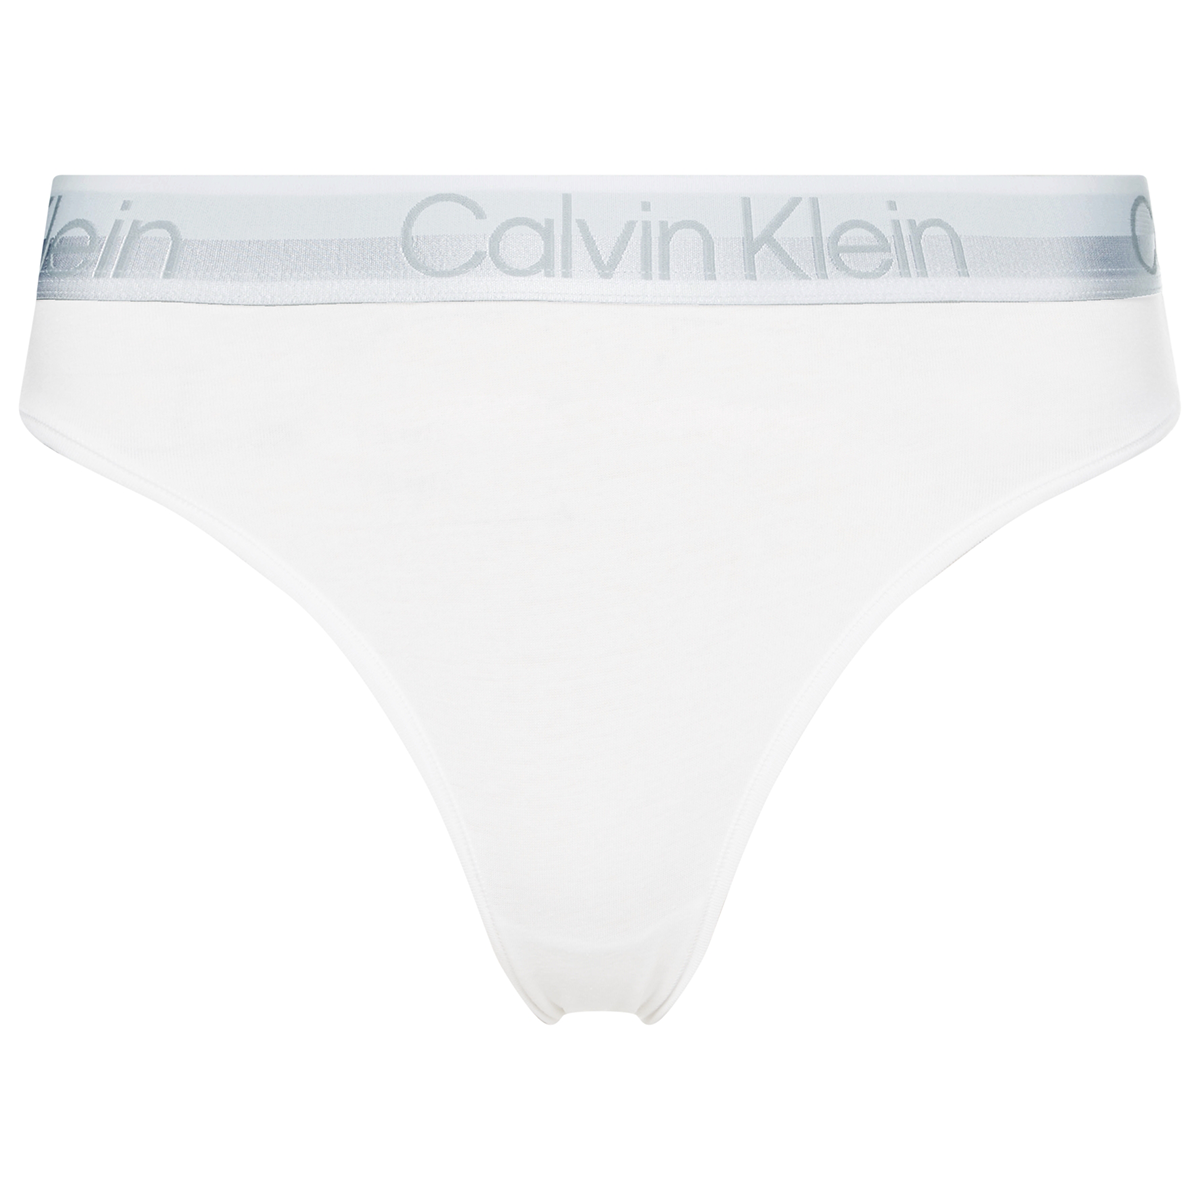 Calvin Klein Cheeky Bikini Tai trusse, Farve: Hvid, Størrelse: XL, Dame